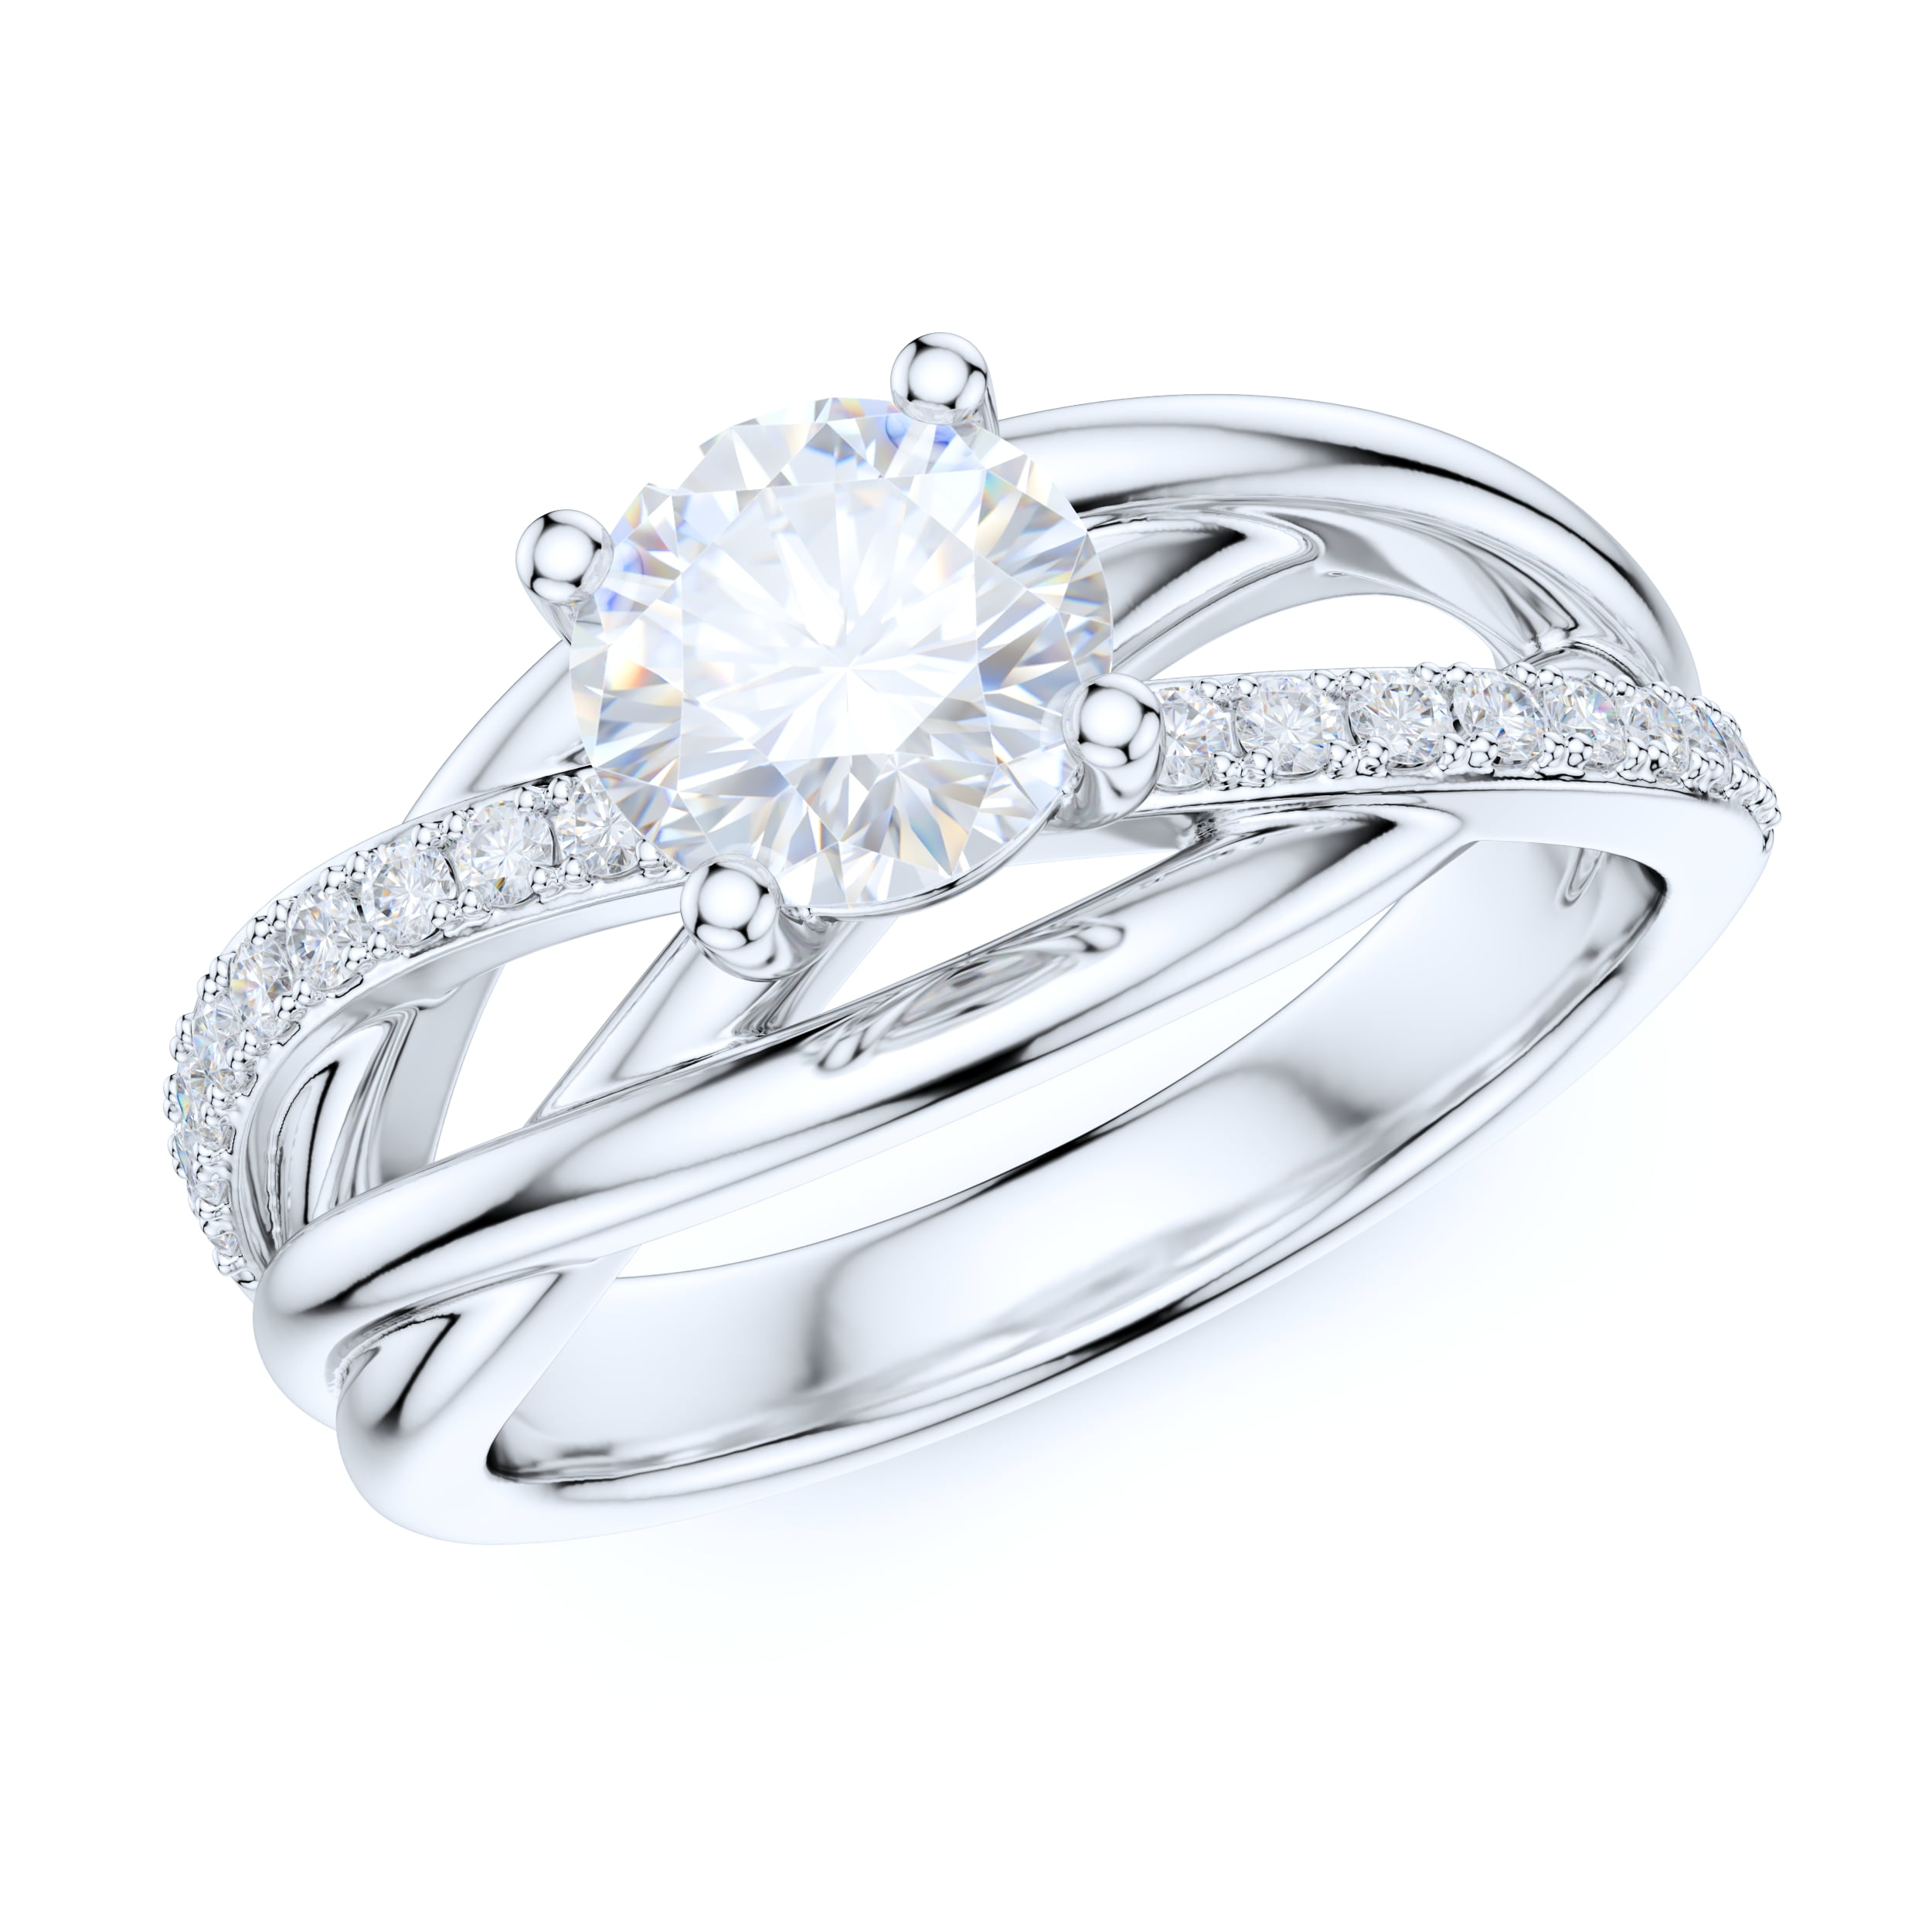  Awmnjtmgpw eternal 925 Sterling Silver unique women's  Engagement Ring Princess Cut Diamond Ring stackable diamond ring set size  6-10